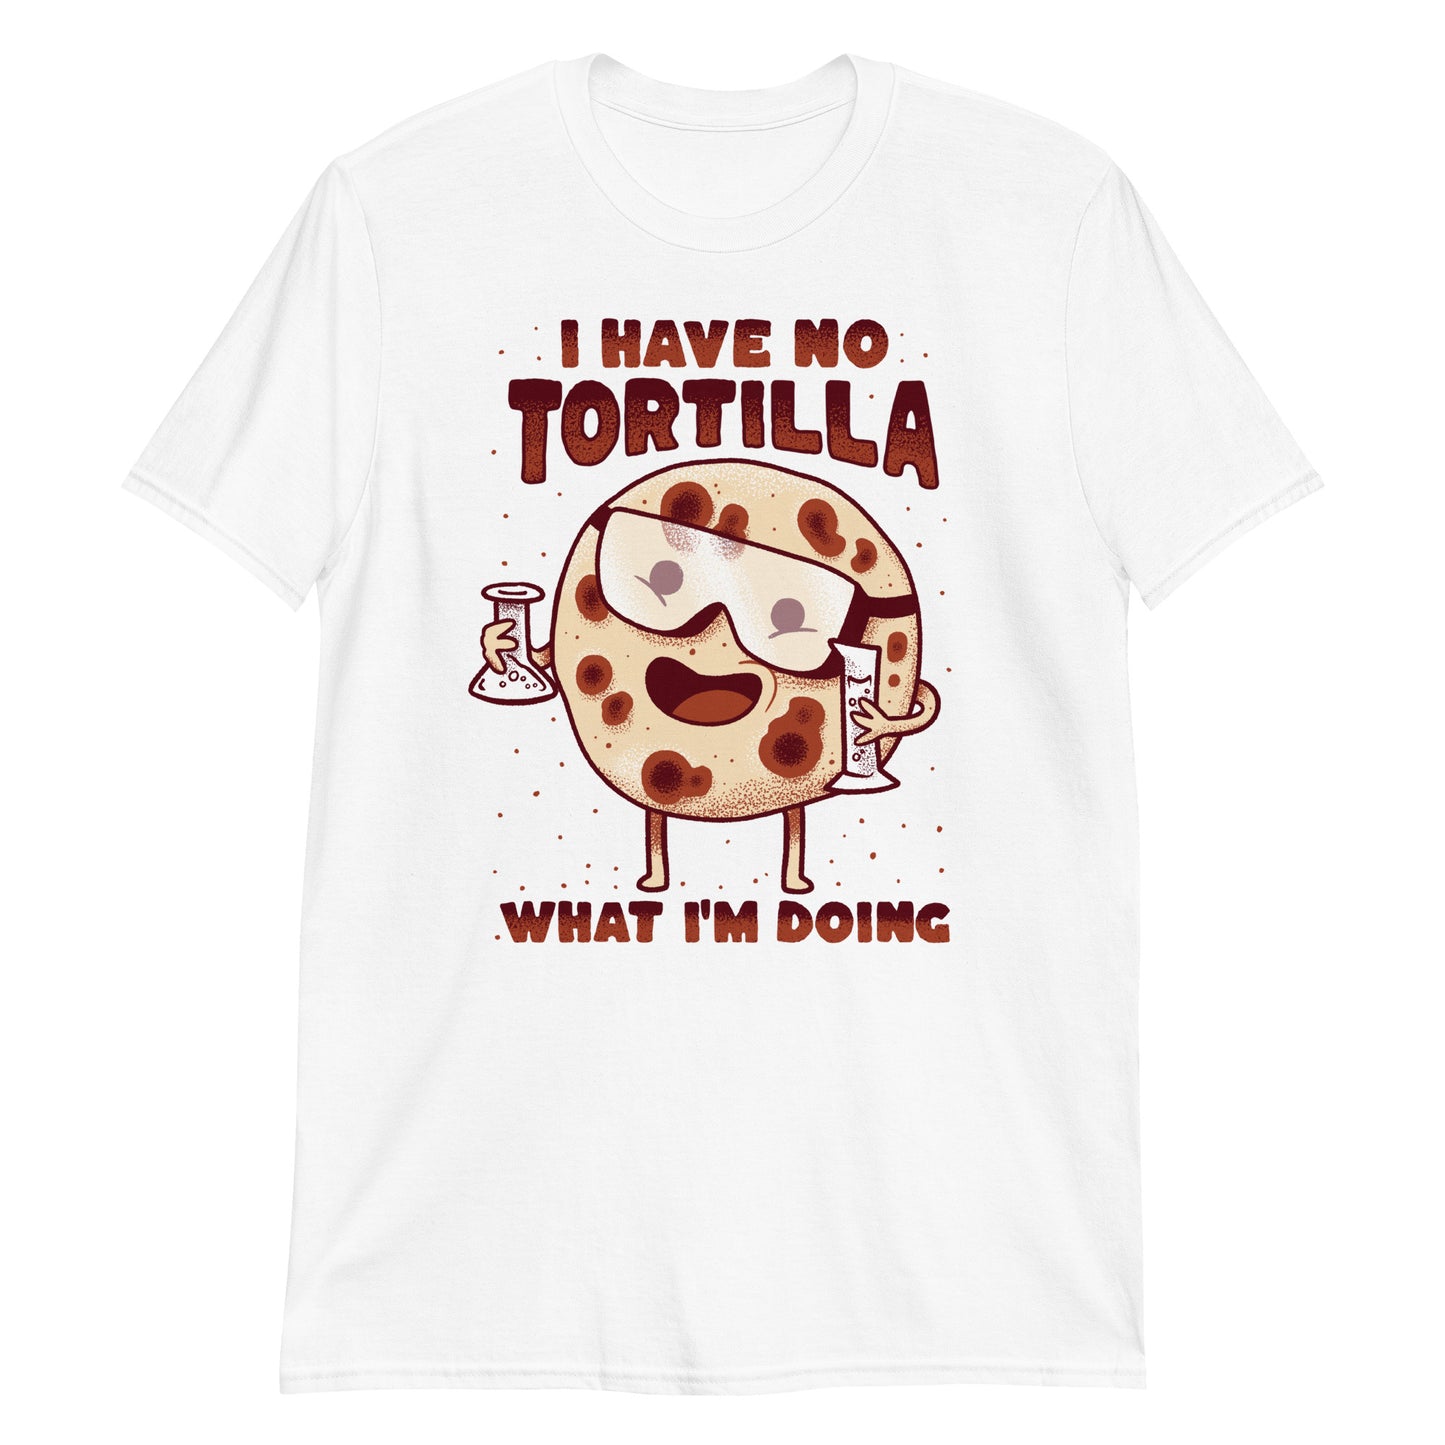 I have no tortilla what I'm doing - Funny Mexican Food T-Shirt